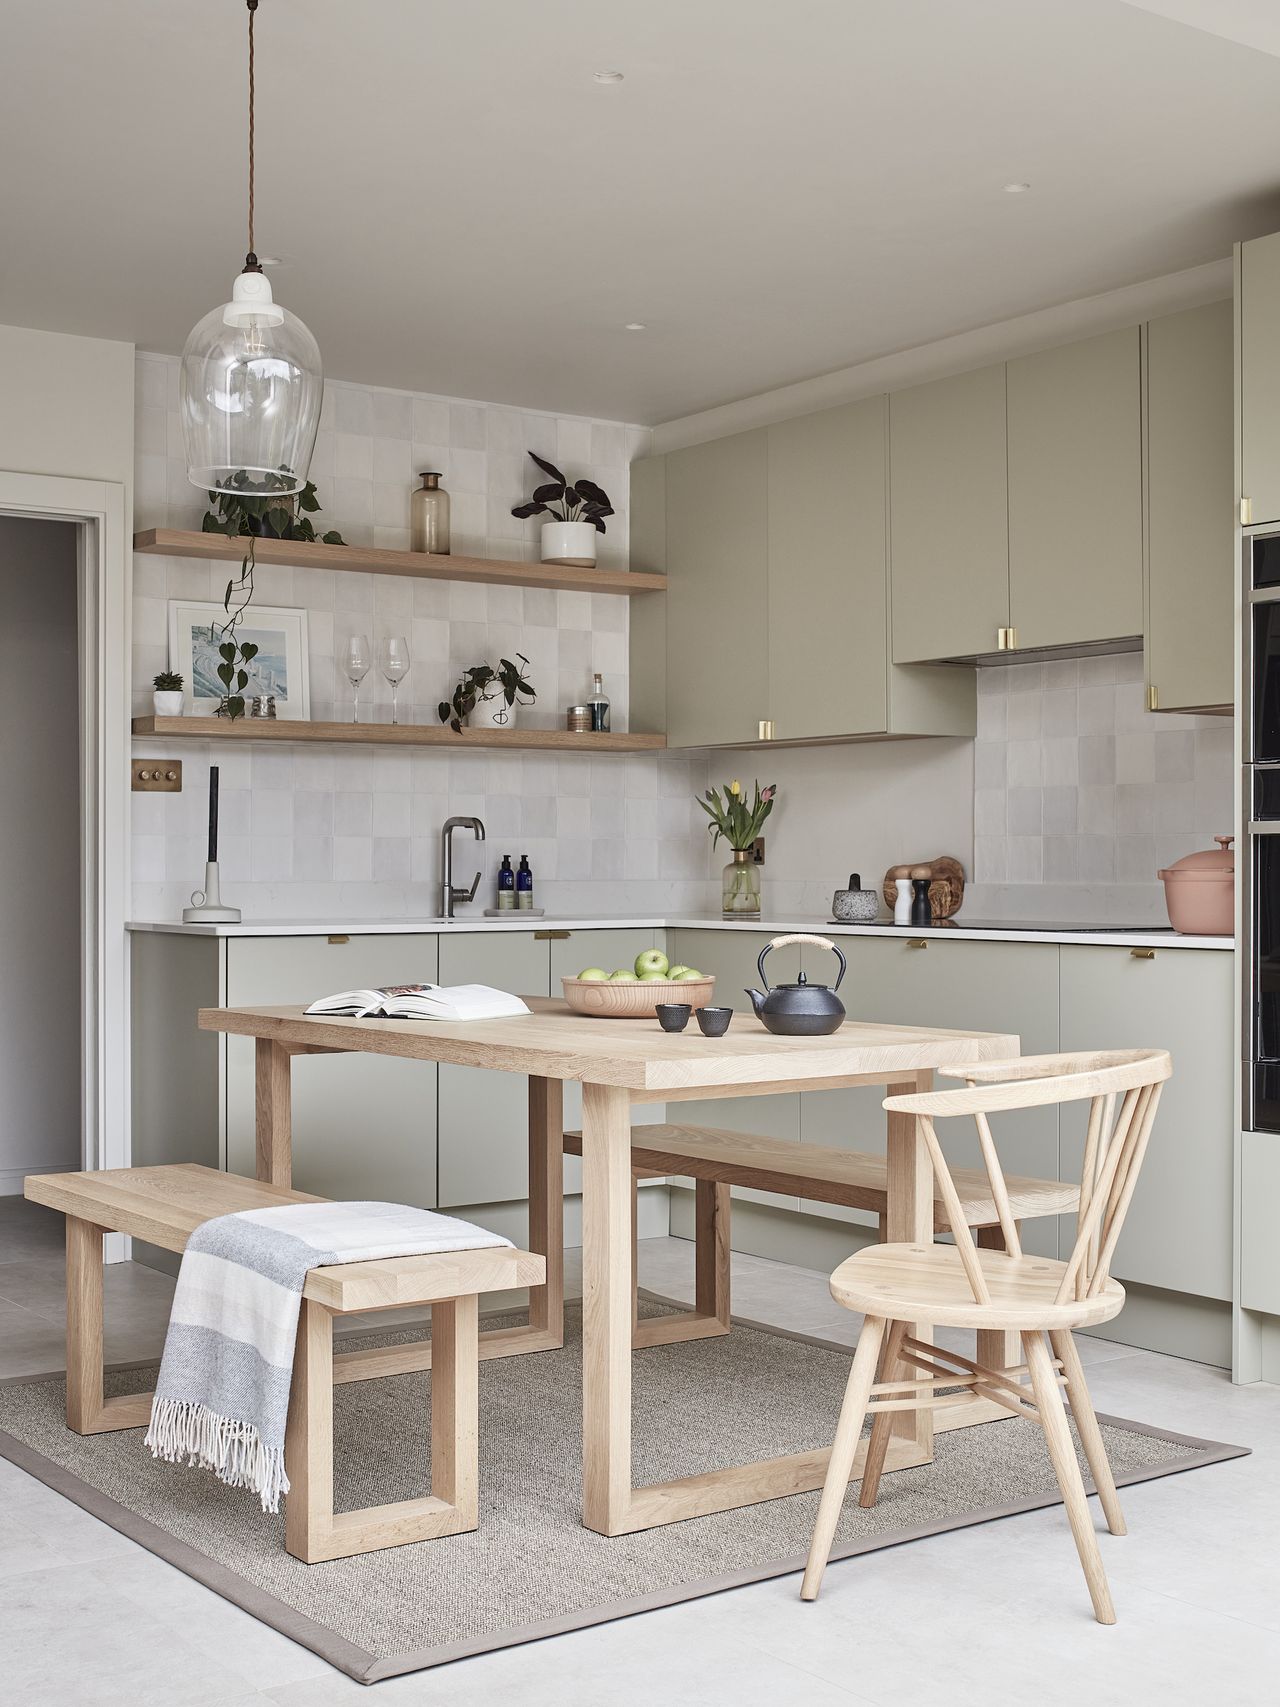 Cottage kitchen ideas: 21 pretty ways to decorate homey spaces